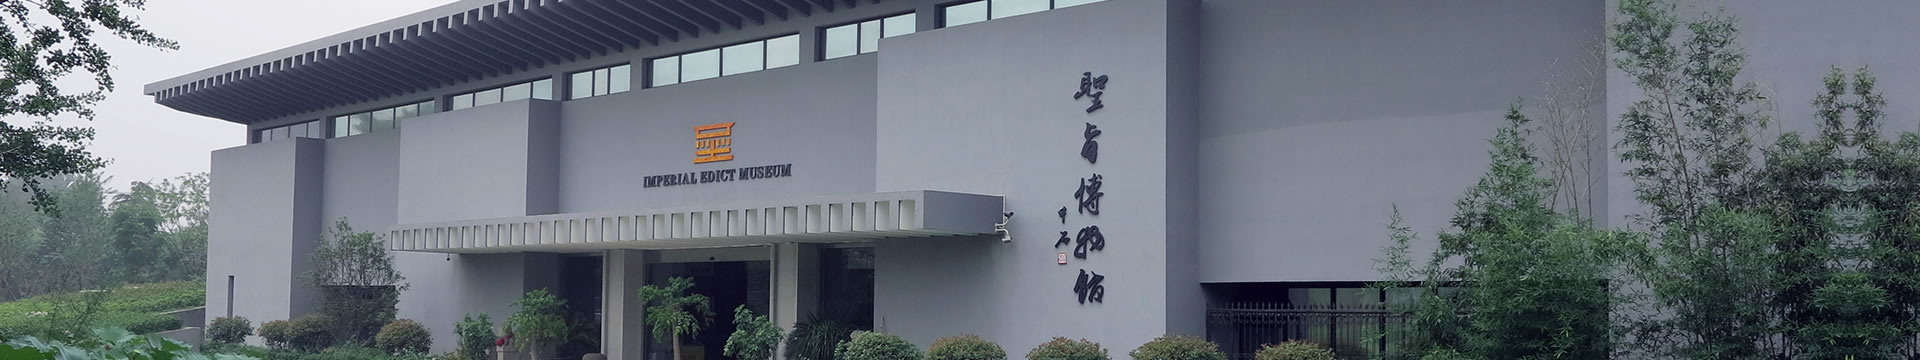 xuzhou imperial decree museum